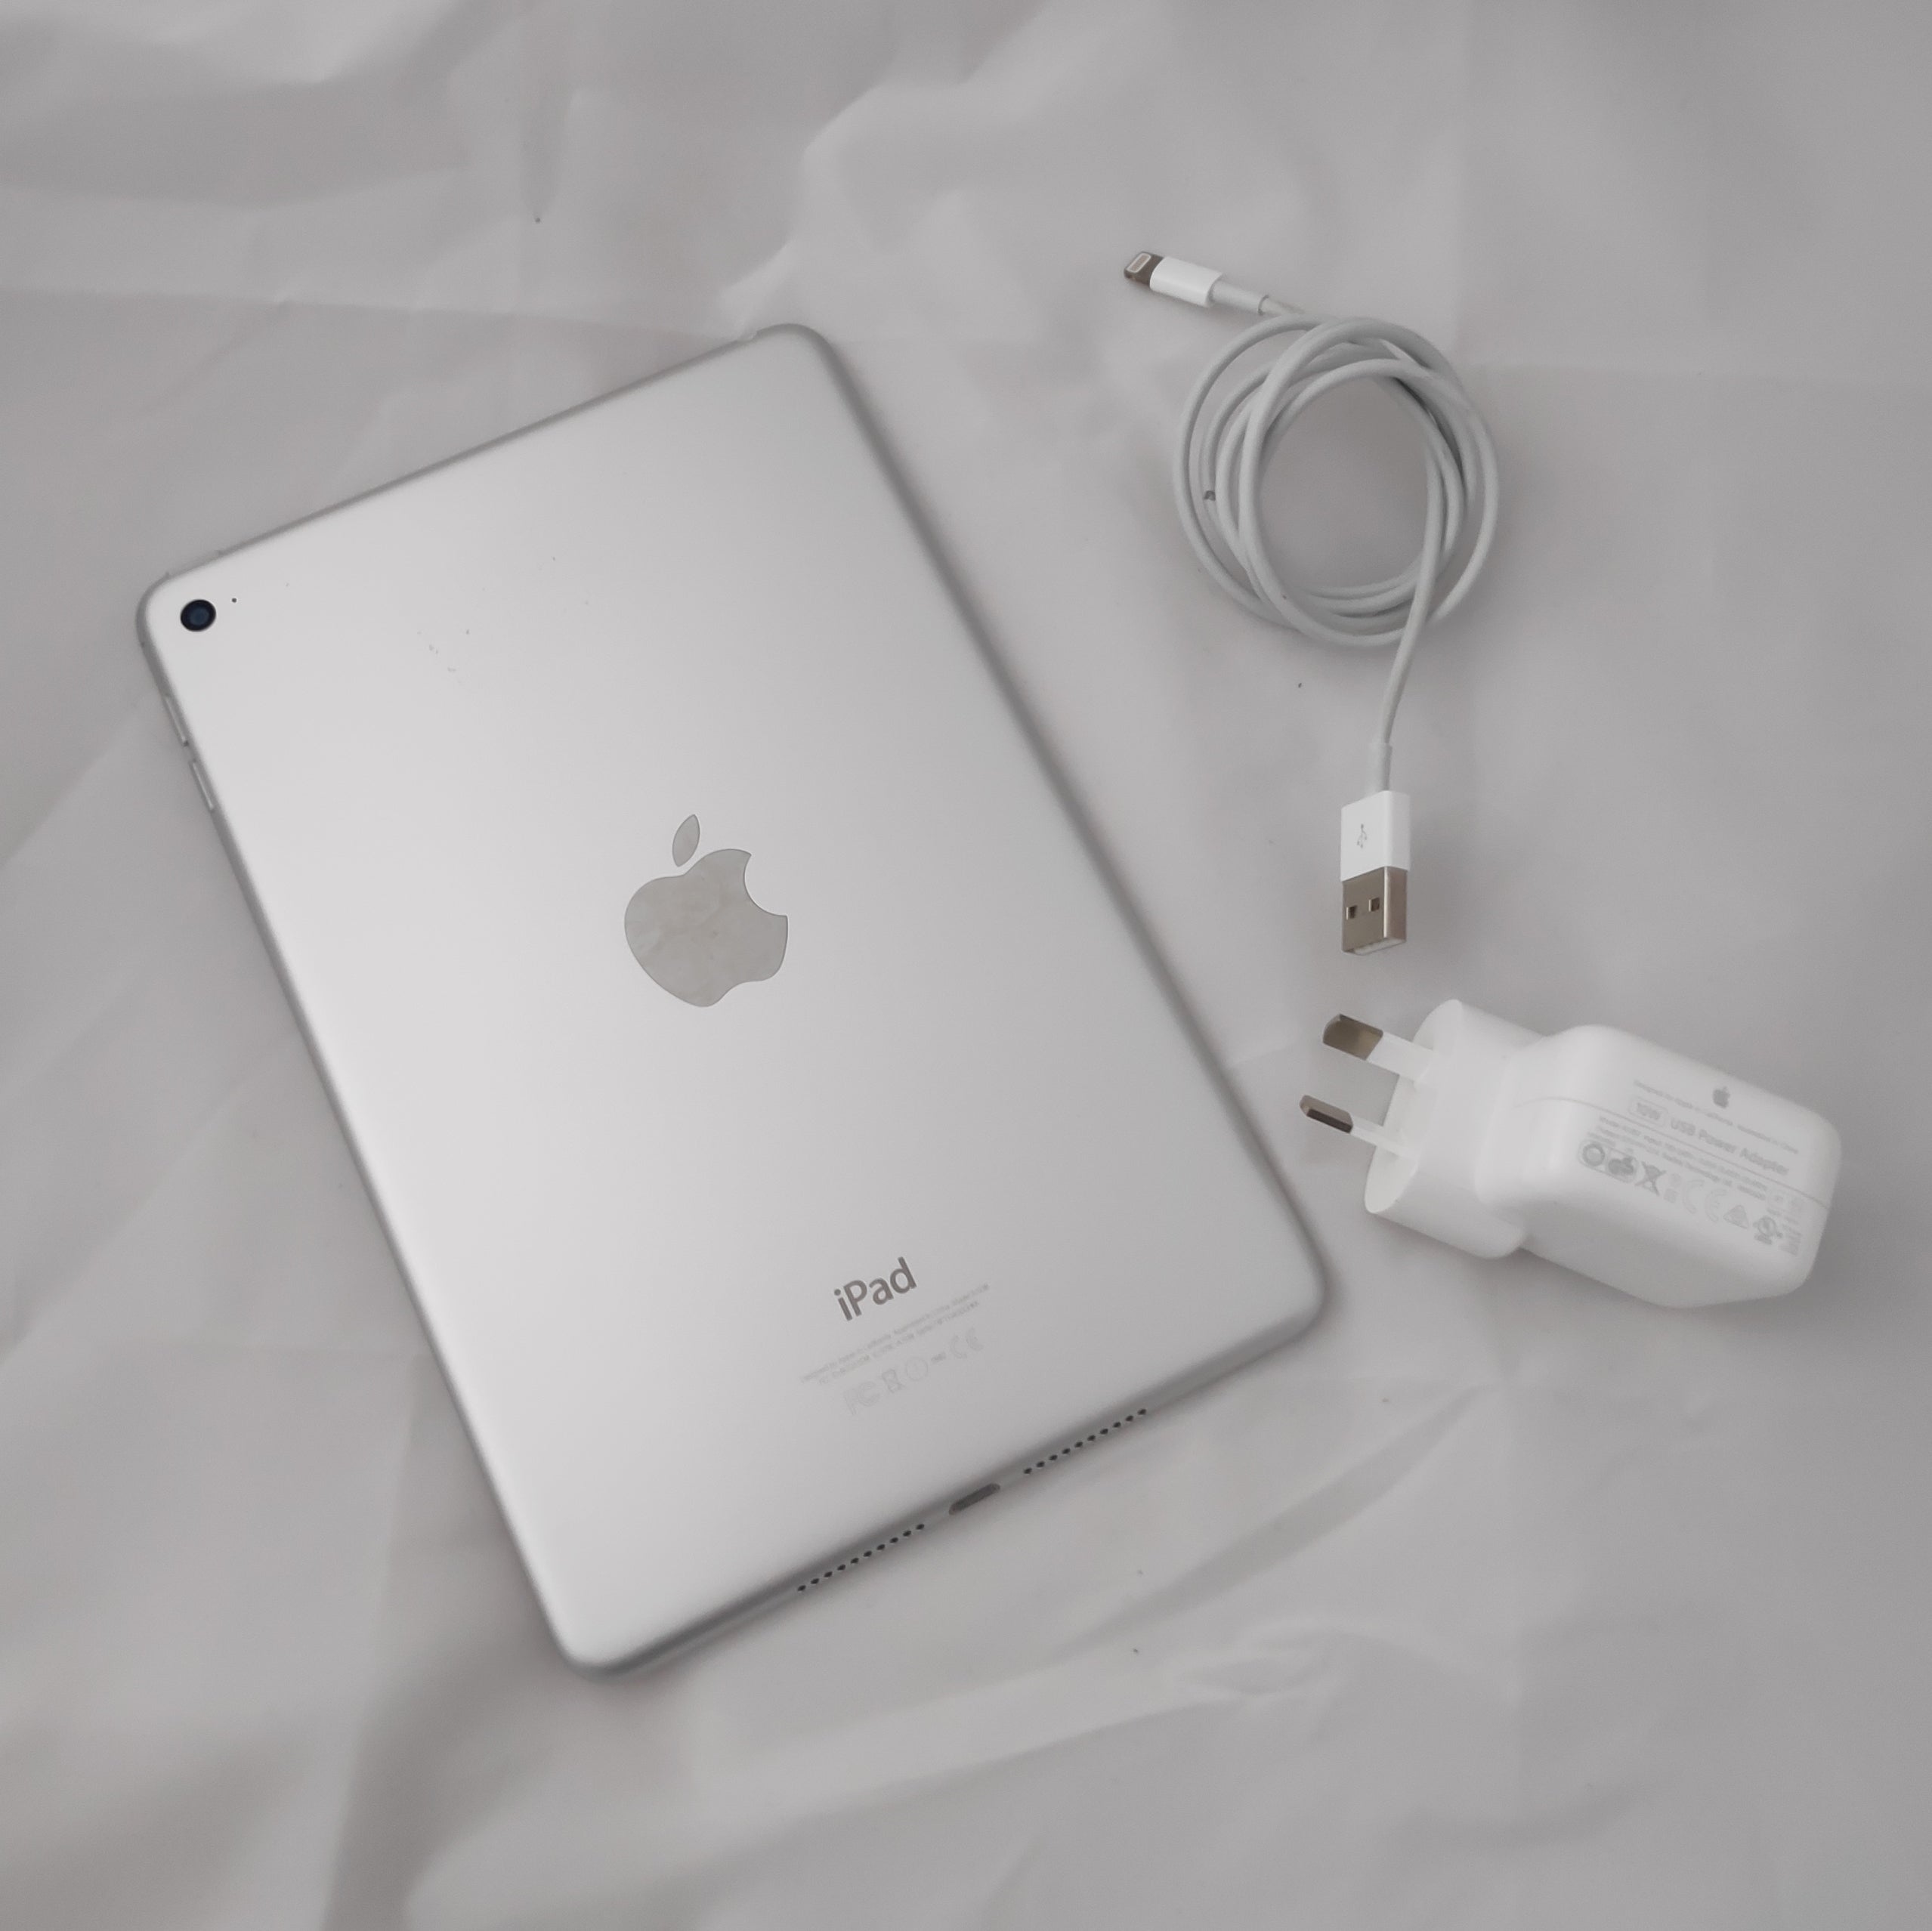 Apple iPad Mini 4 128GB White Wifi (As New) New Battery, Glass Screen Protector & Shipping*